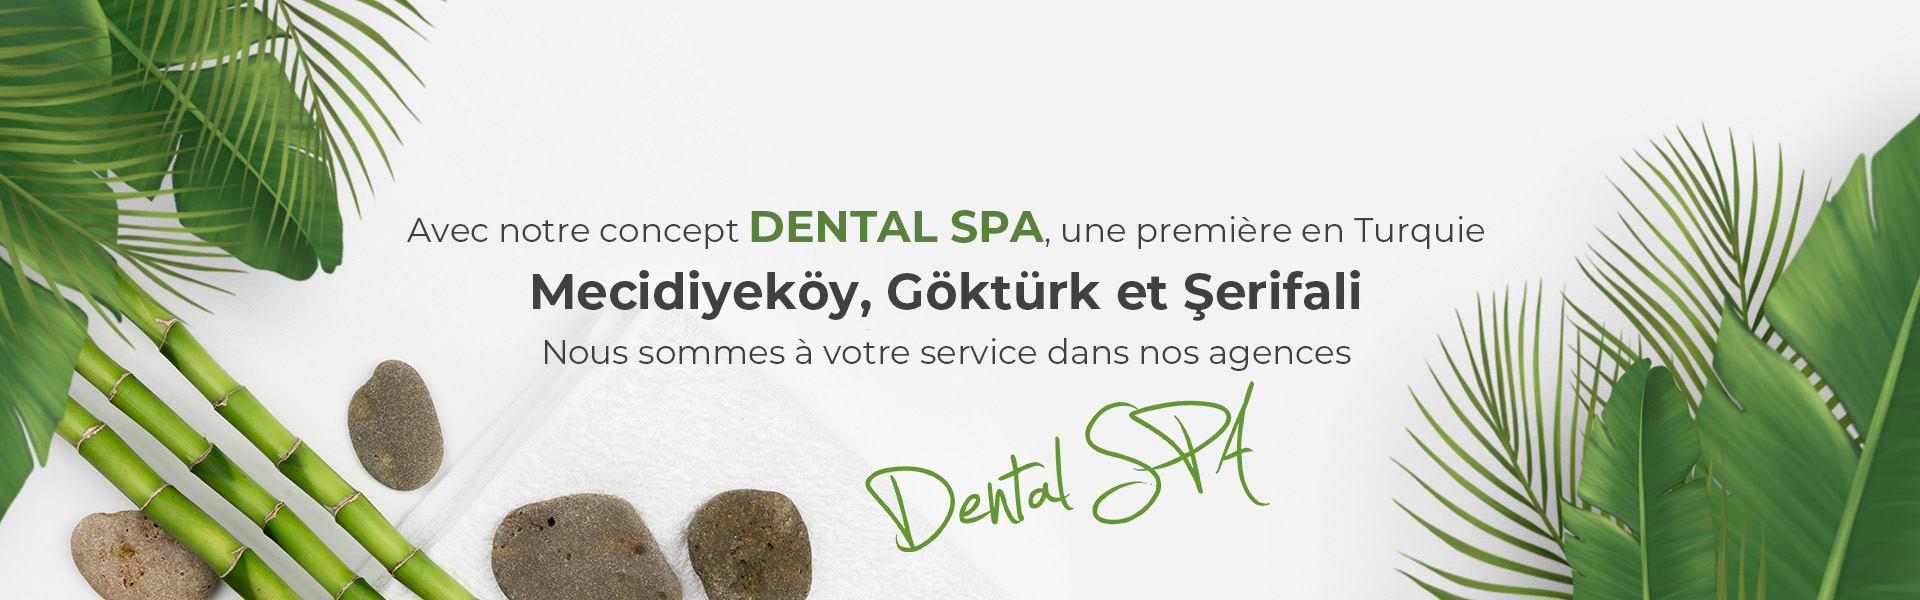 Slider 4 Dental Spa Groupe Dentaire Hospitadent - Hôpital Dentaire